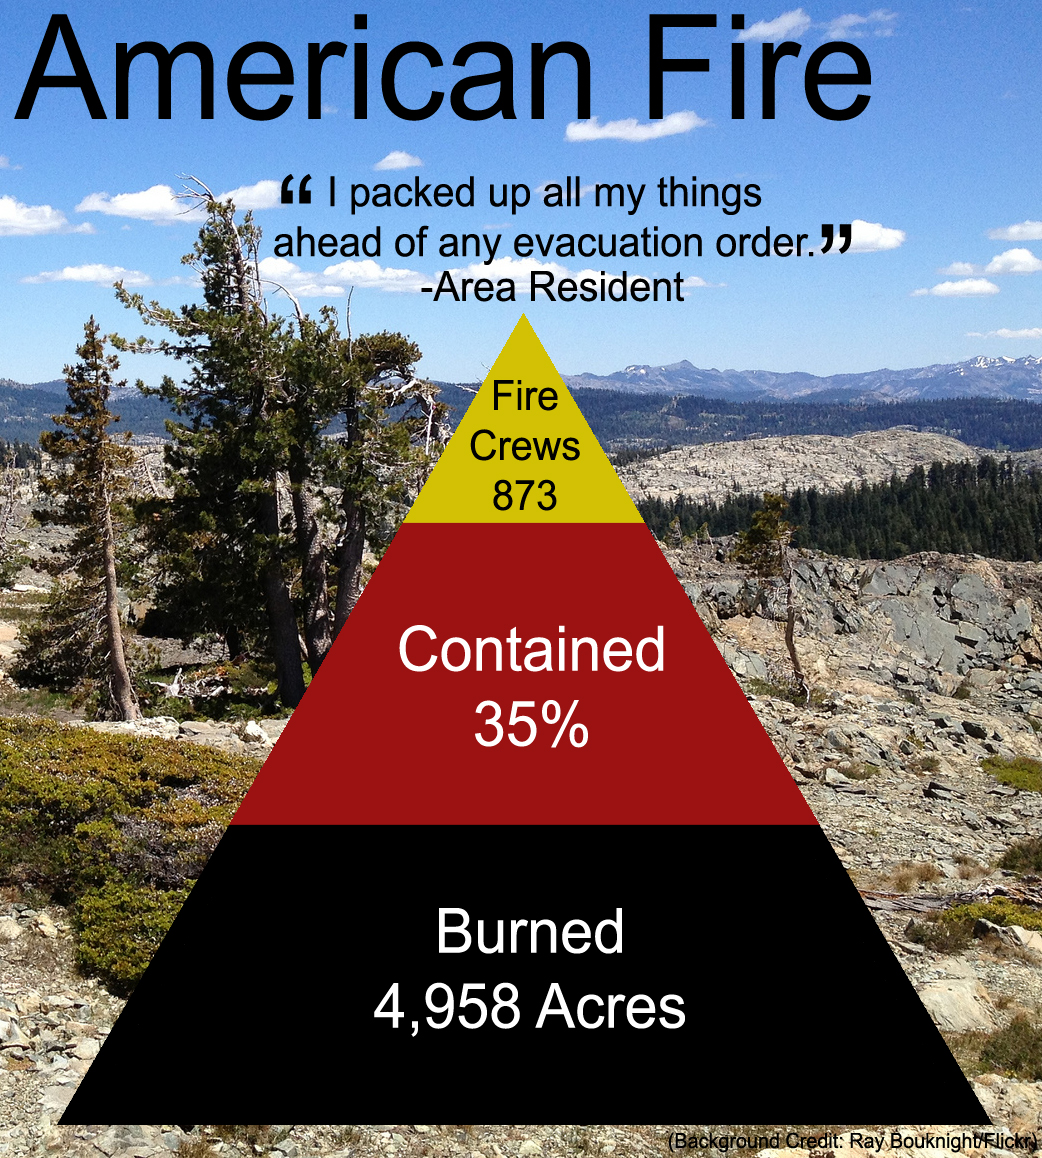 American Fire Stats